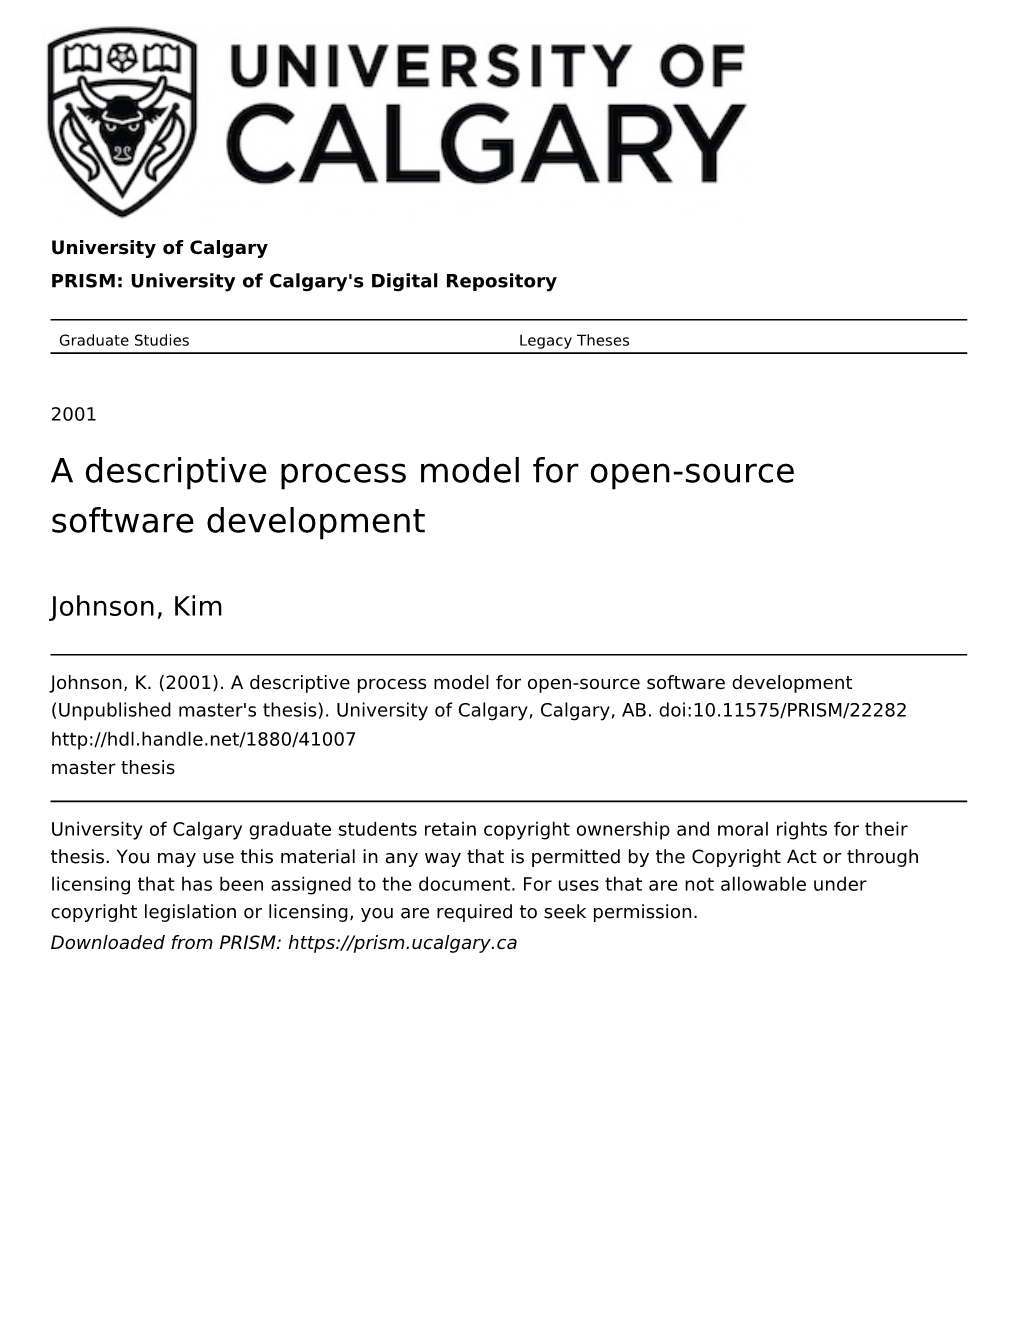 A Descriptive Process Model for Open-Source Software Development